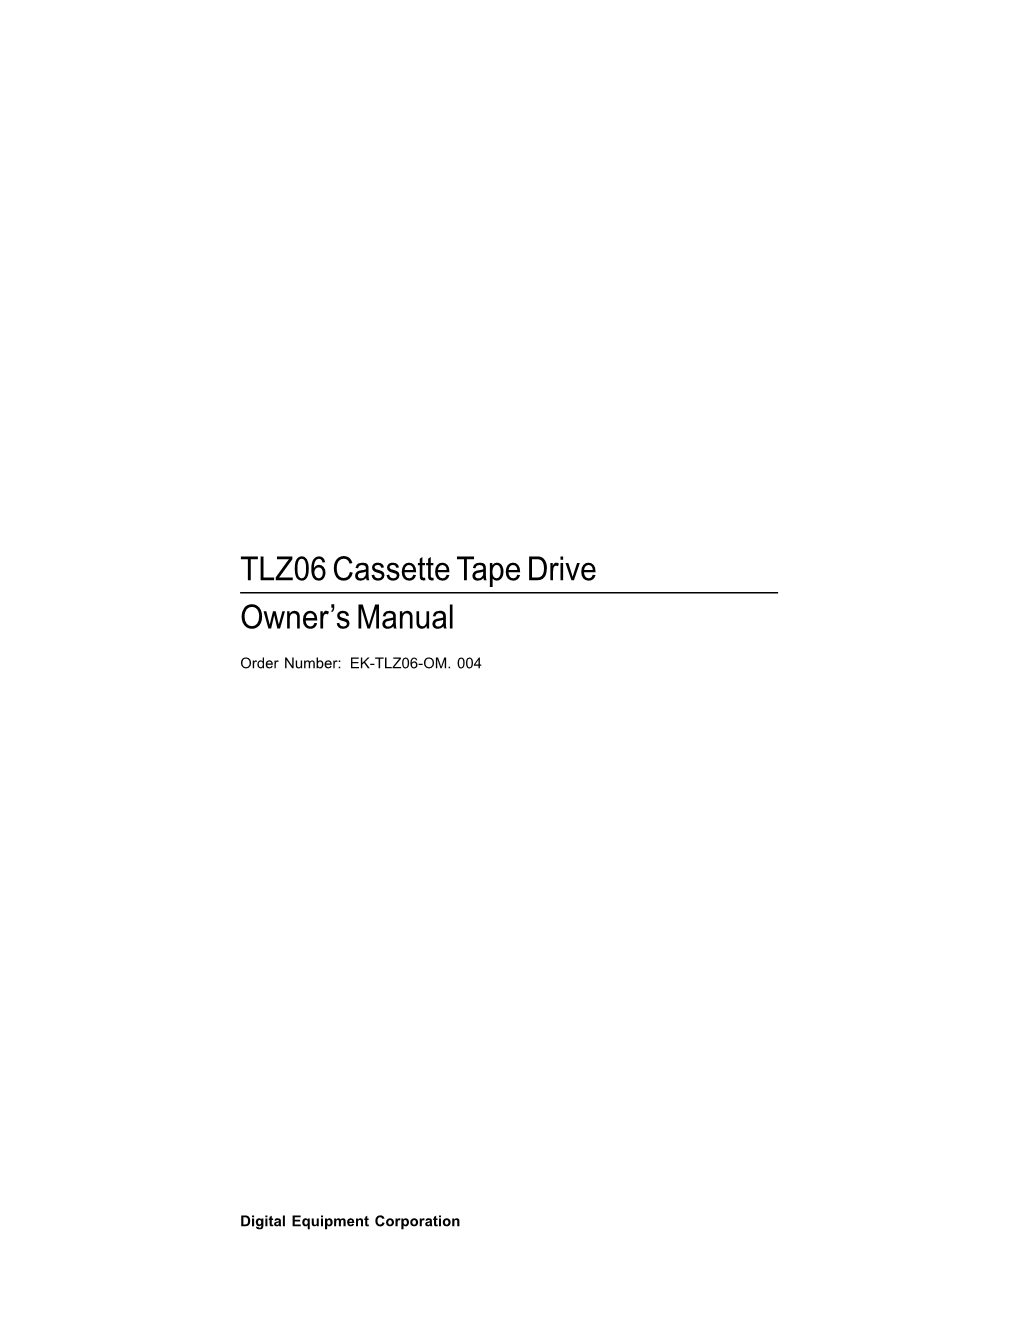 TLZ06 Cassette Tape Drive Owner's Manual